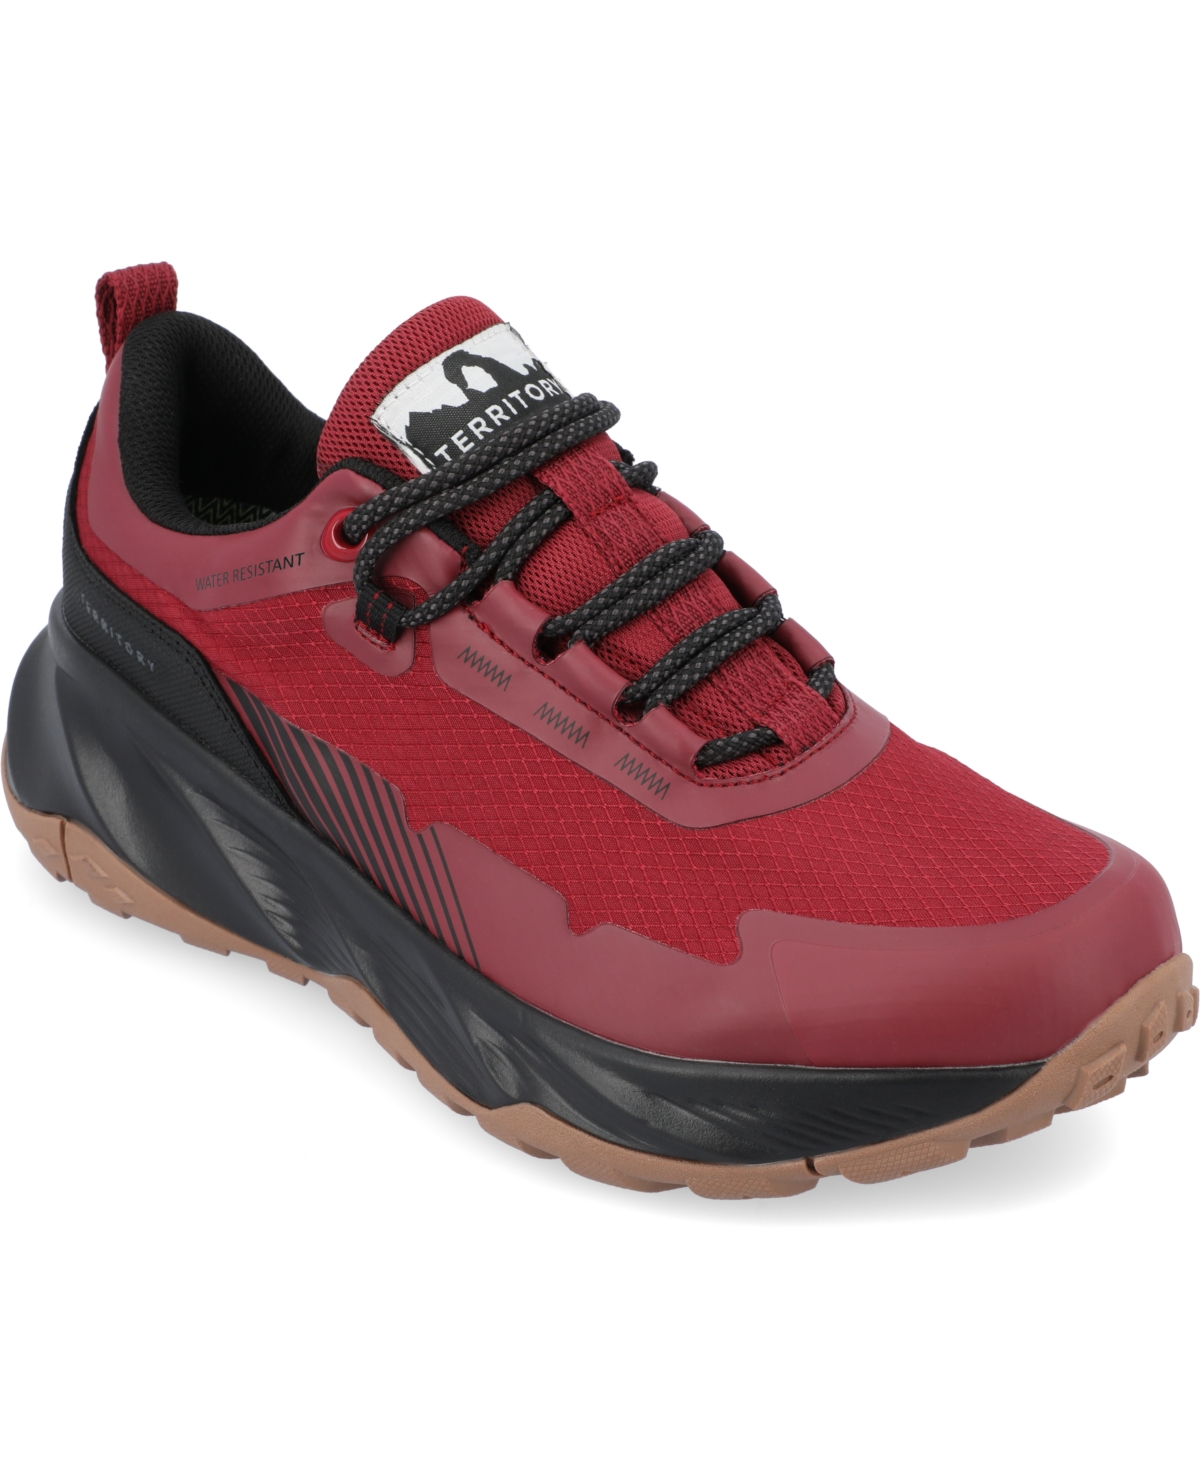 Men's Cascade Water Resistant Sneakers - Red